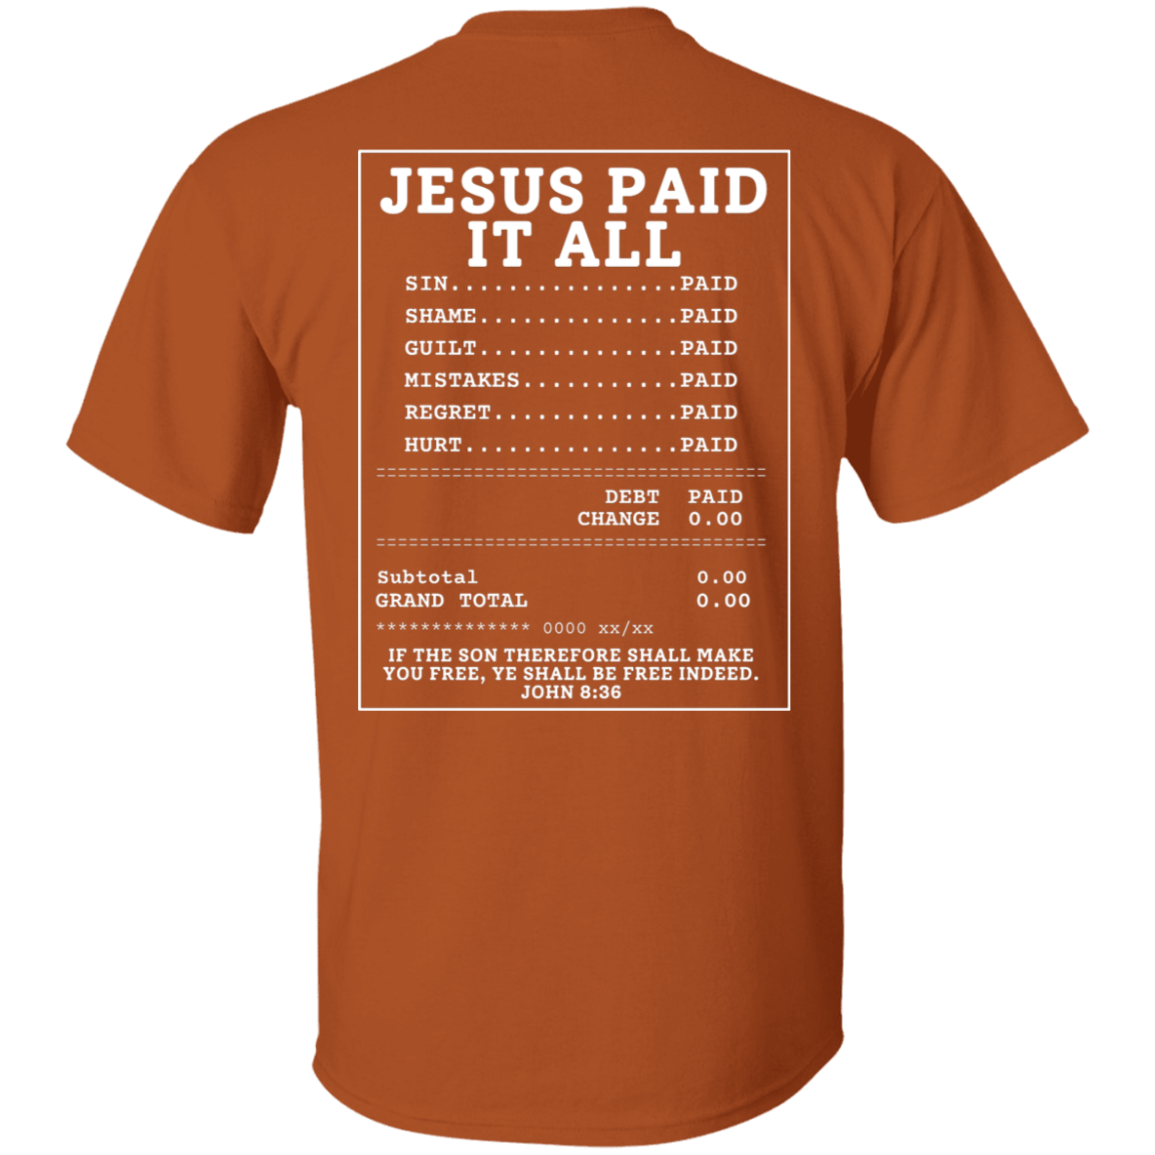 Jesus Paid My Ransom T-Shirt | 2-Sided